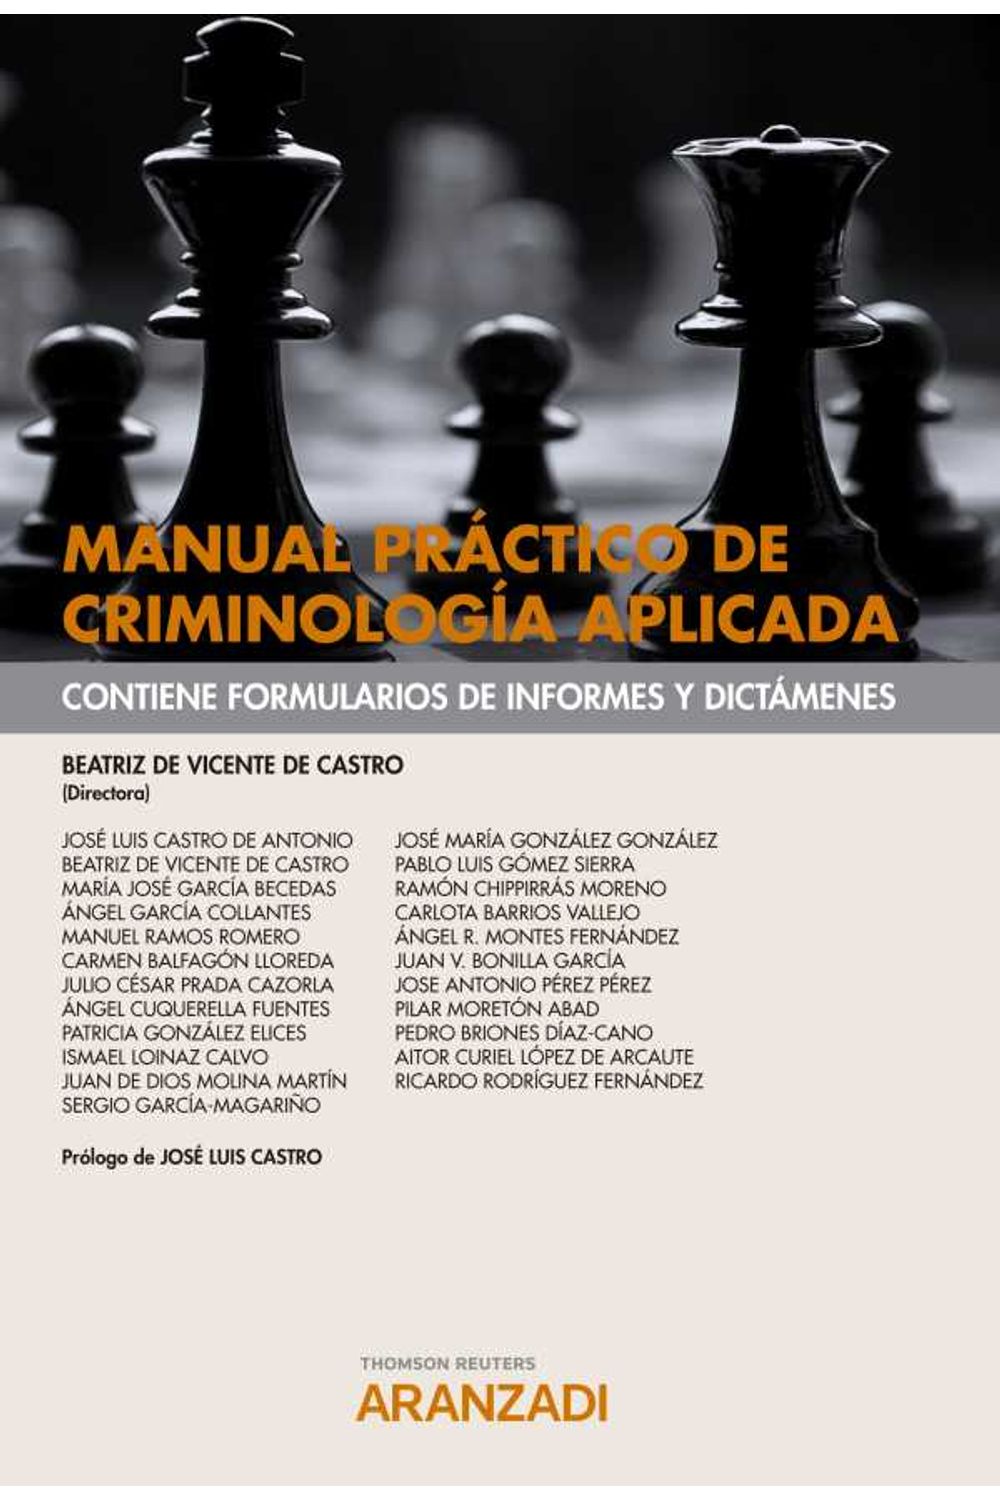 bw-manual-praacutectico-de-criminologiacutea-aplicada-aranzadi-civitas-9788413913681